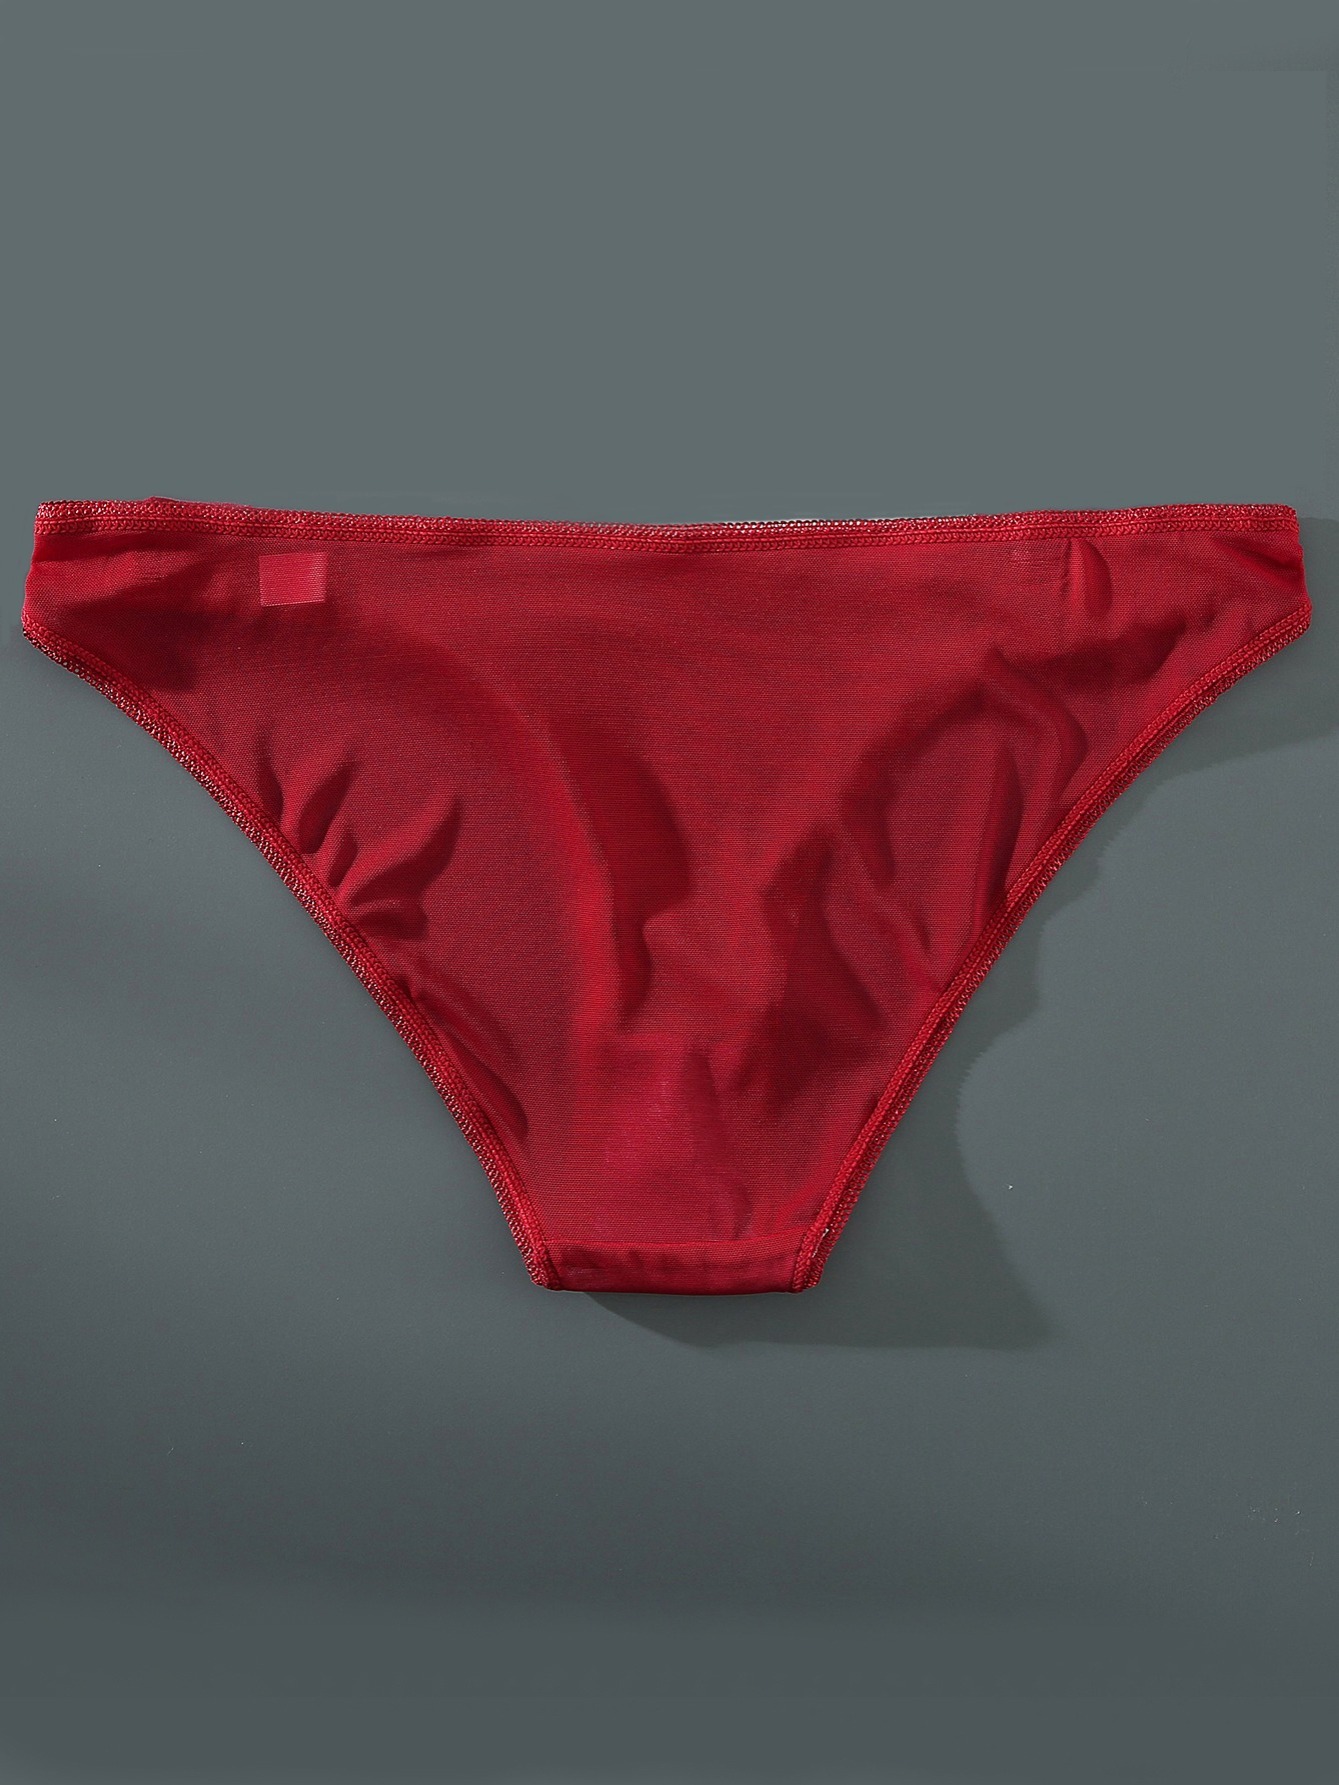 Ultra-thin Panties Women Sexy Seamless Briefs Solid Underwear Underpants  Knicker